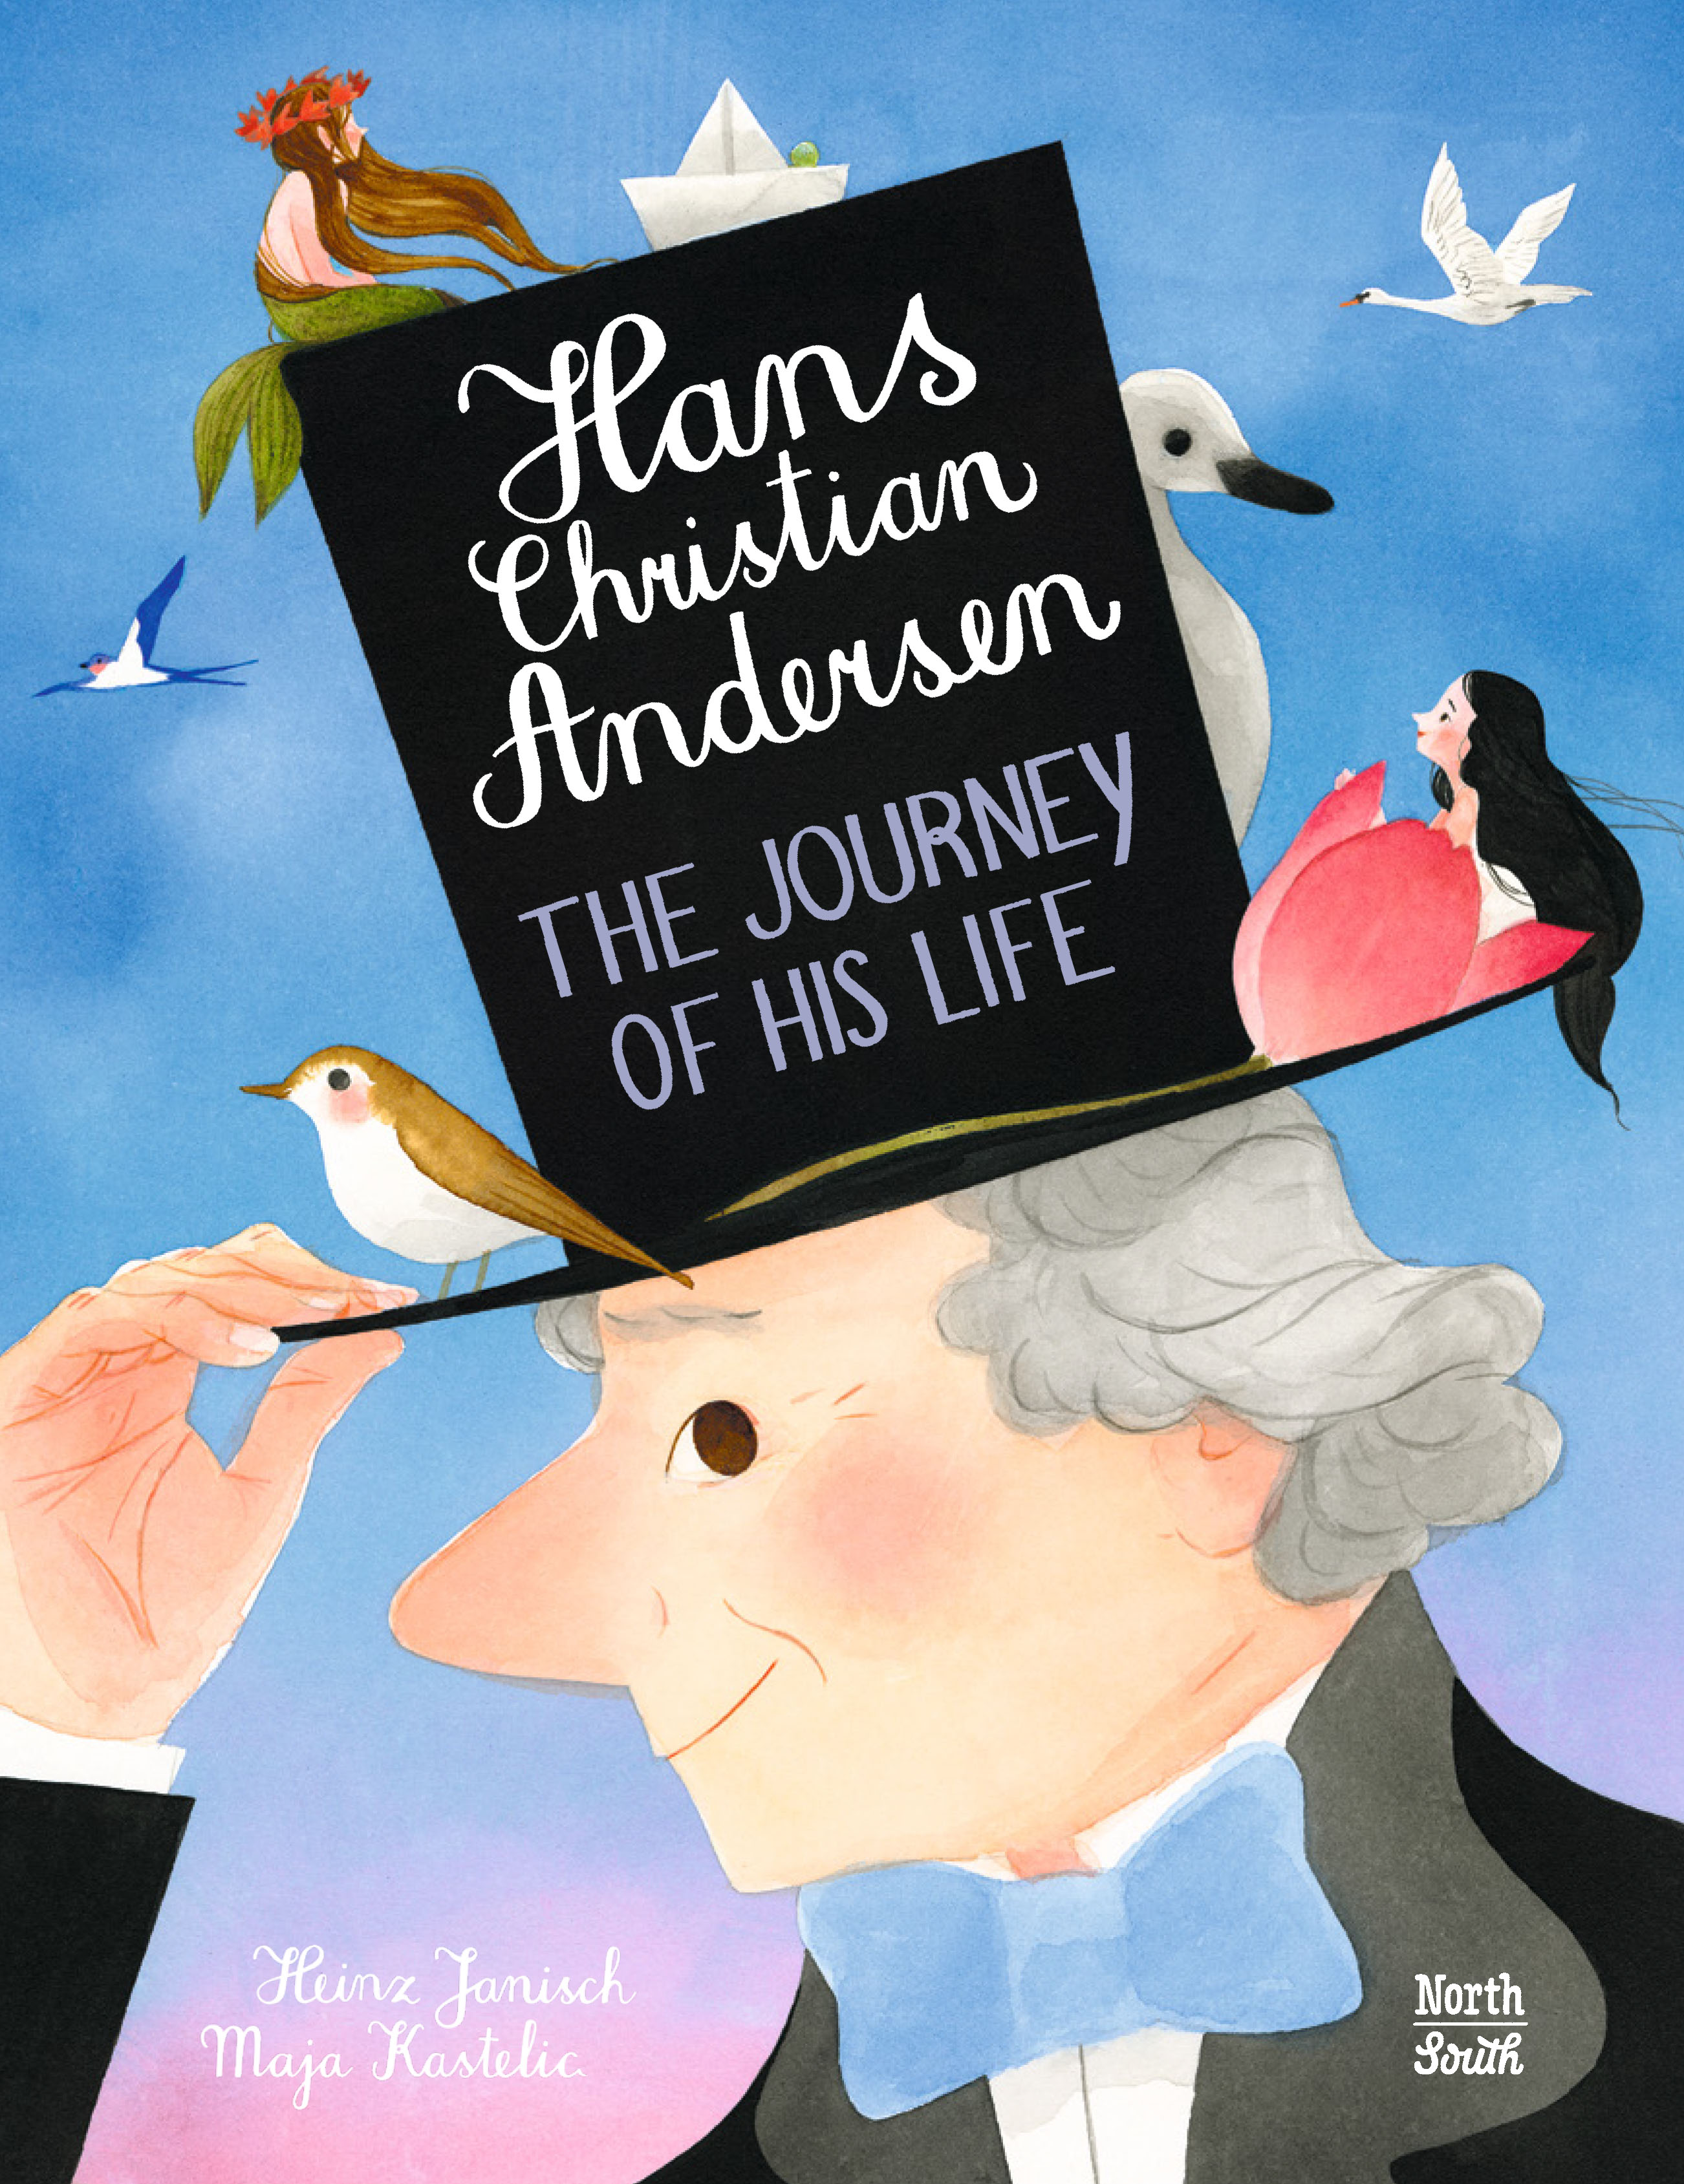 Hans Christian Andersen Experience